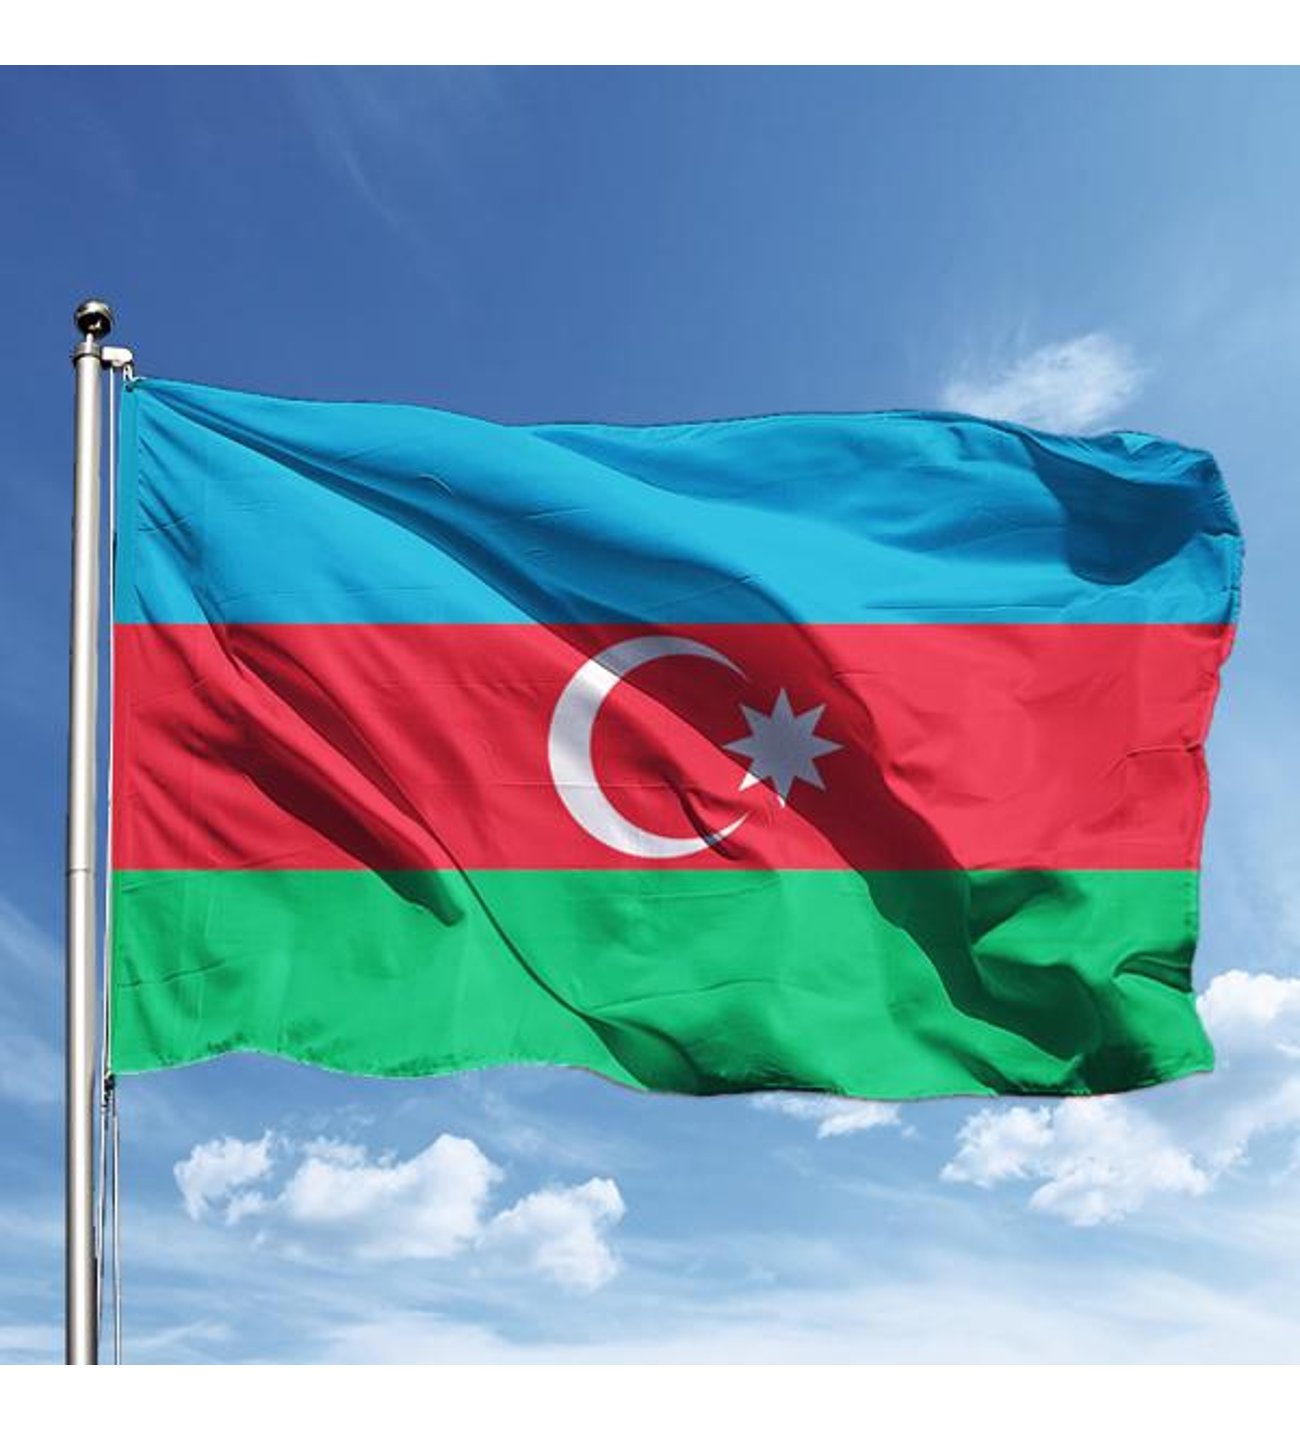 Azerbaycan Bayragi 50X75 Cm Kcm14060620 1 Cdb89A8554694301Ba6F2D5A35D5Dcd4